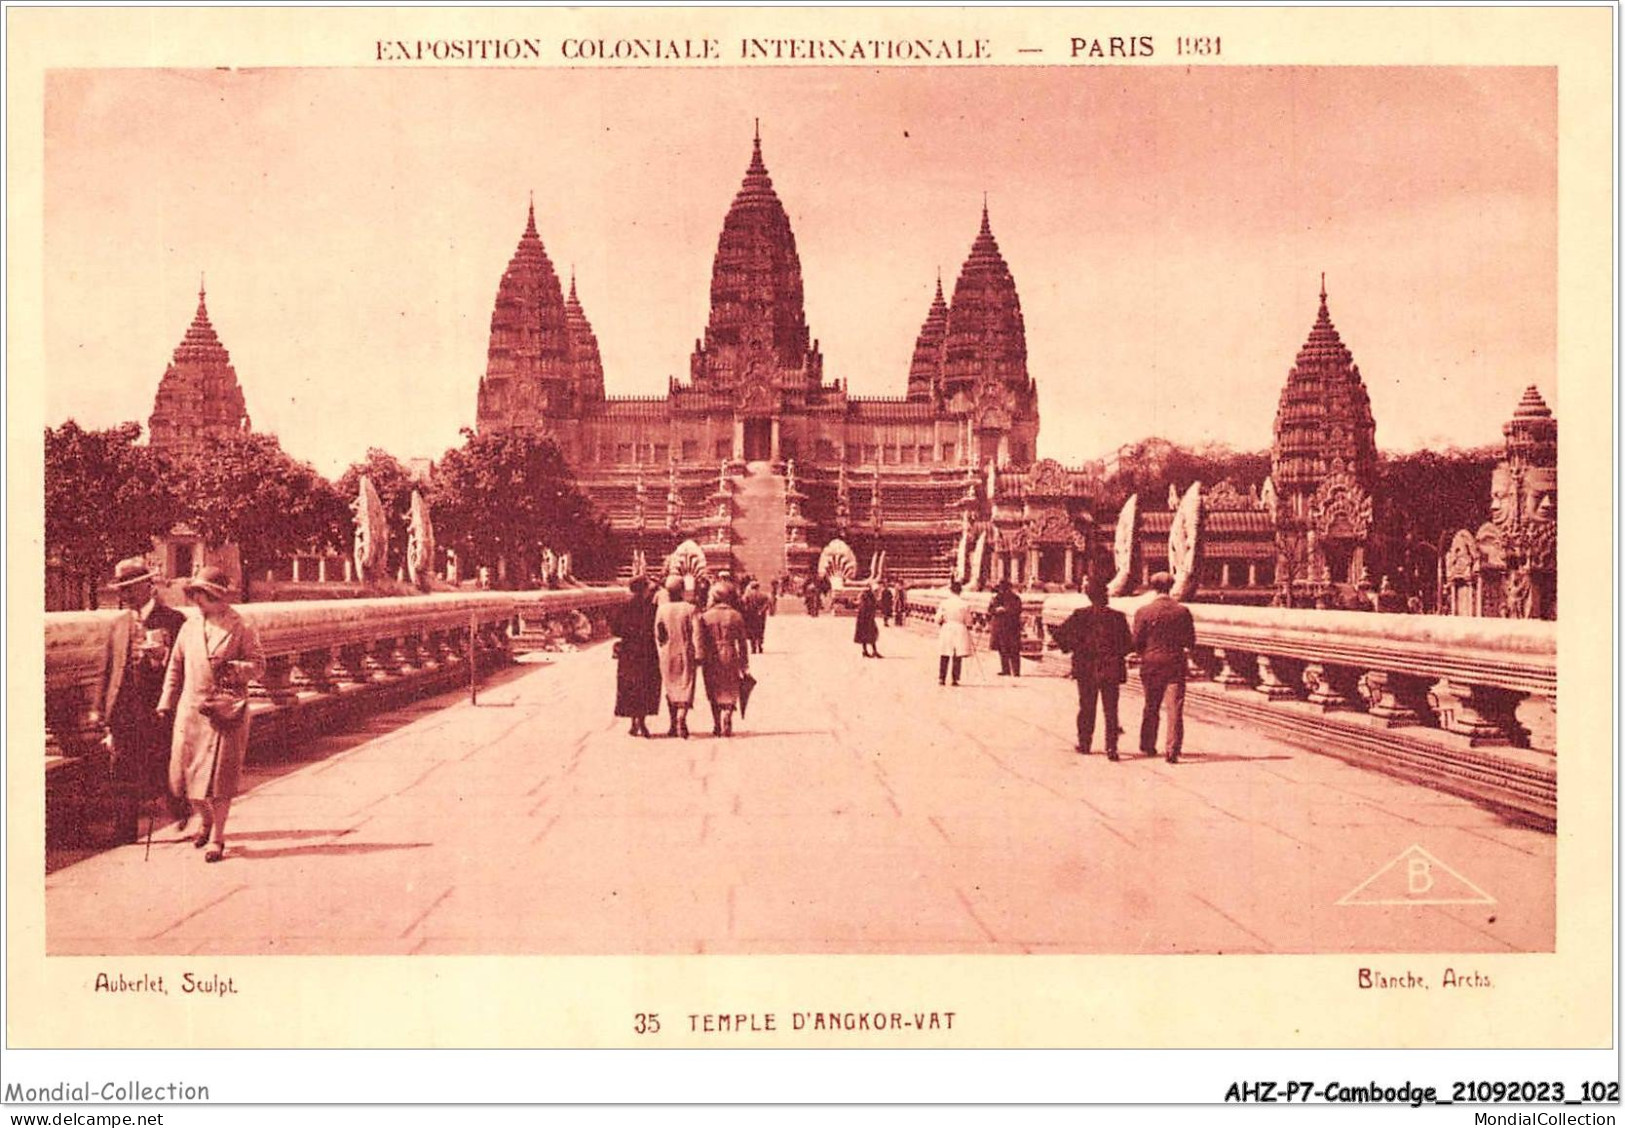 AHZP7-CAMBODGE-0647 - EXPOSITION COLONIALE INTERNATIONALE - PARIS 1931 - TEMPLE D'ANGKOR-VAT - Cambodia